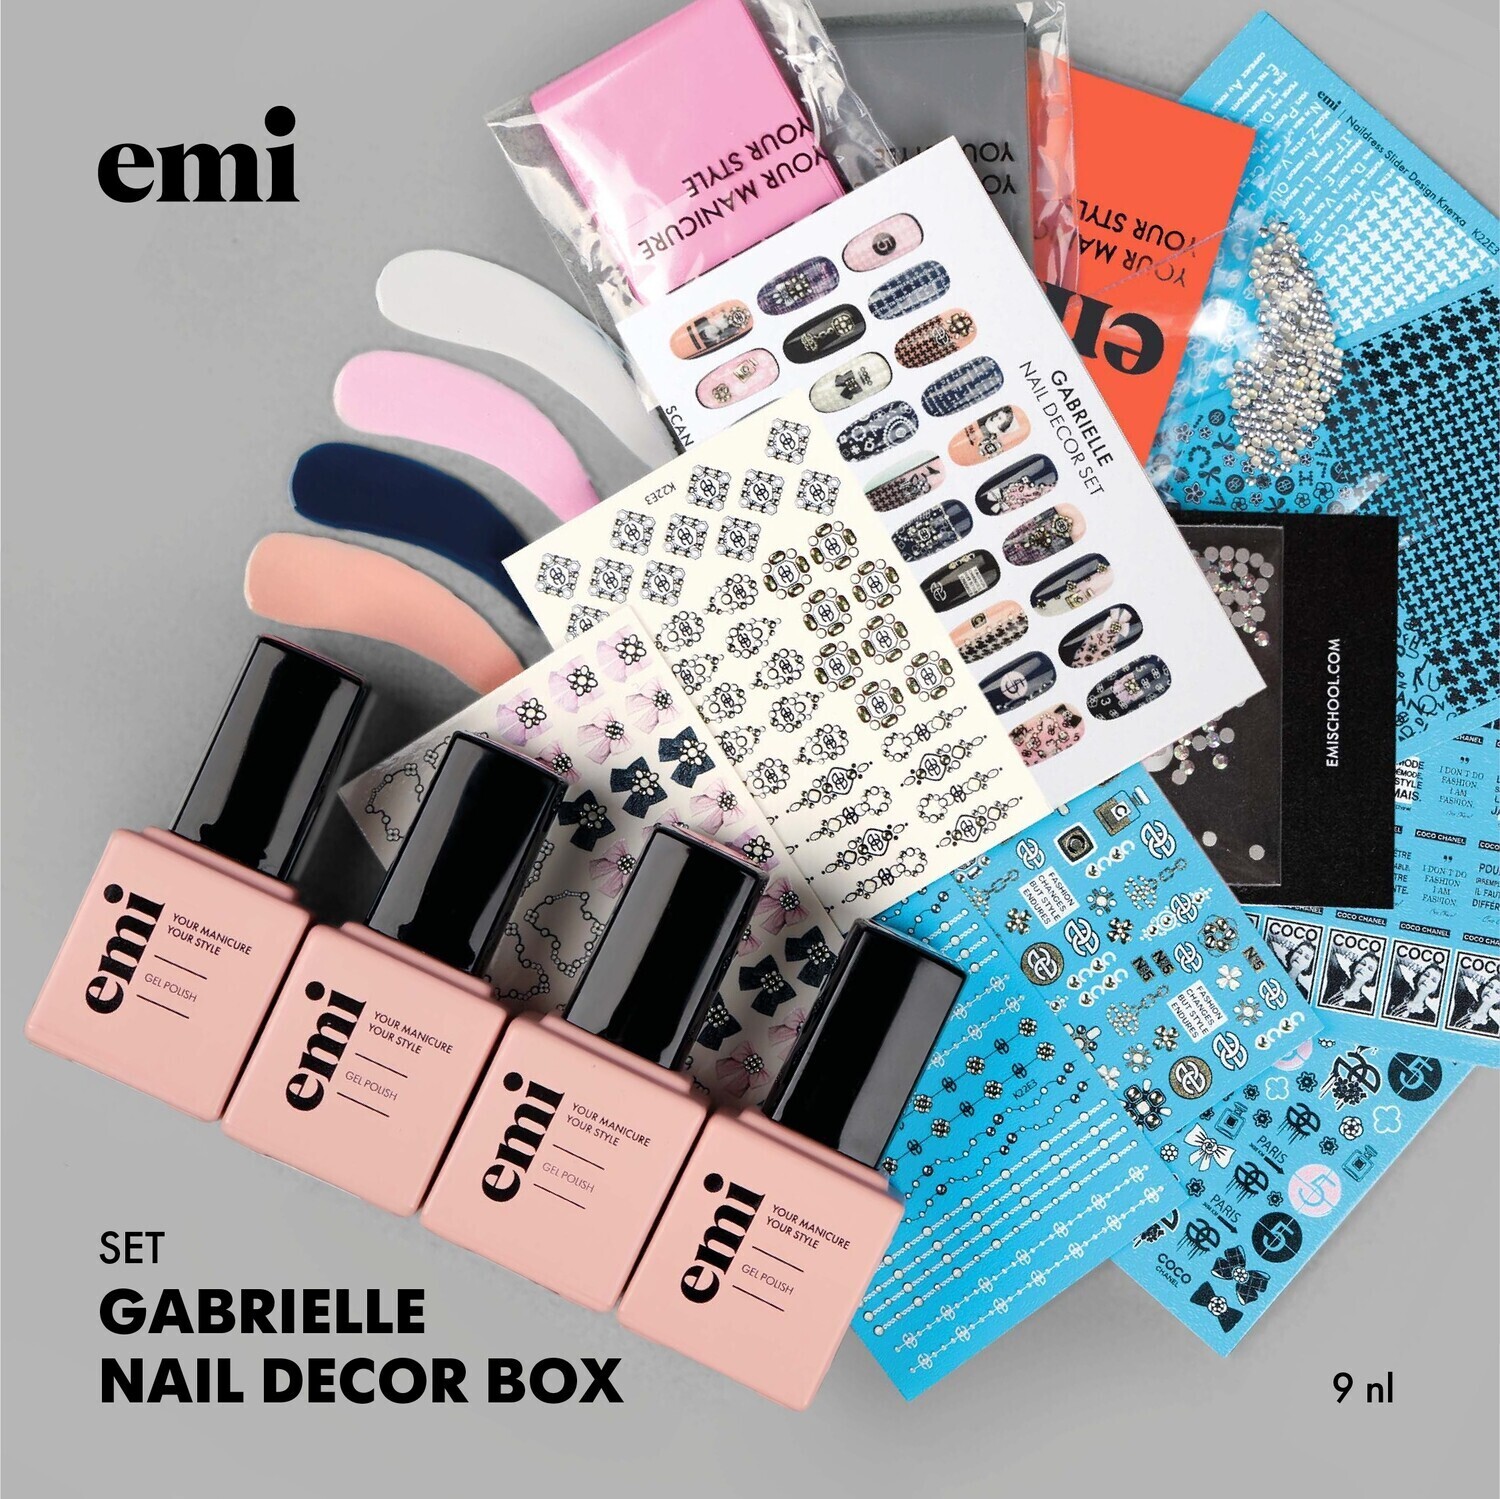 EMI Set Gabrielle Nail Decor Box Limited Edition